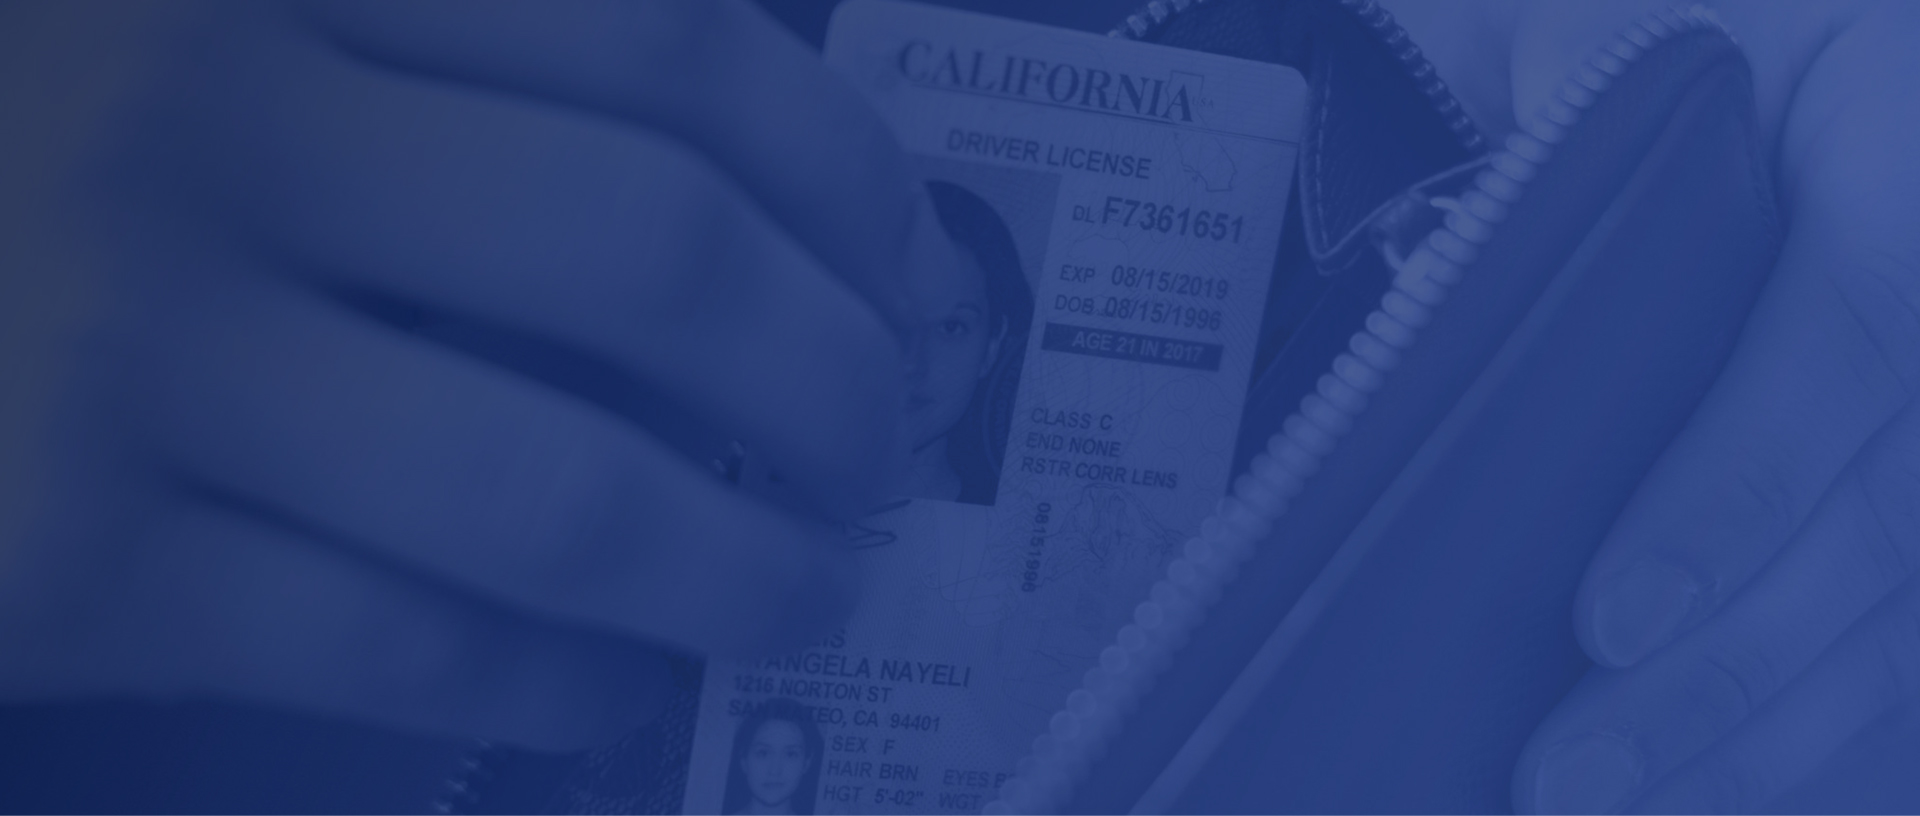 California fake id card